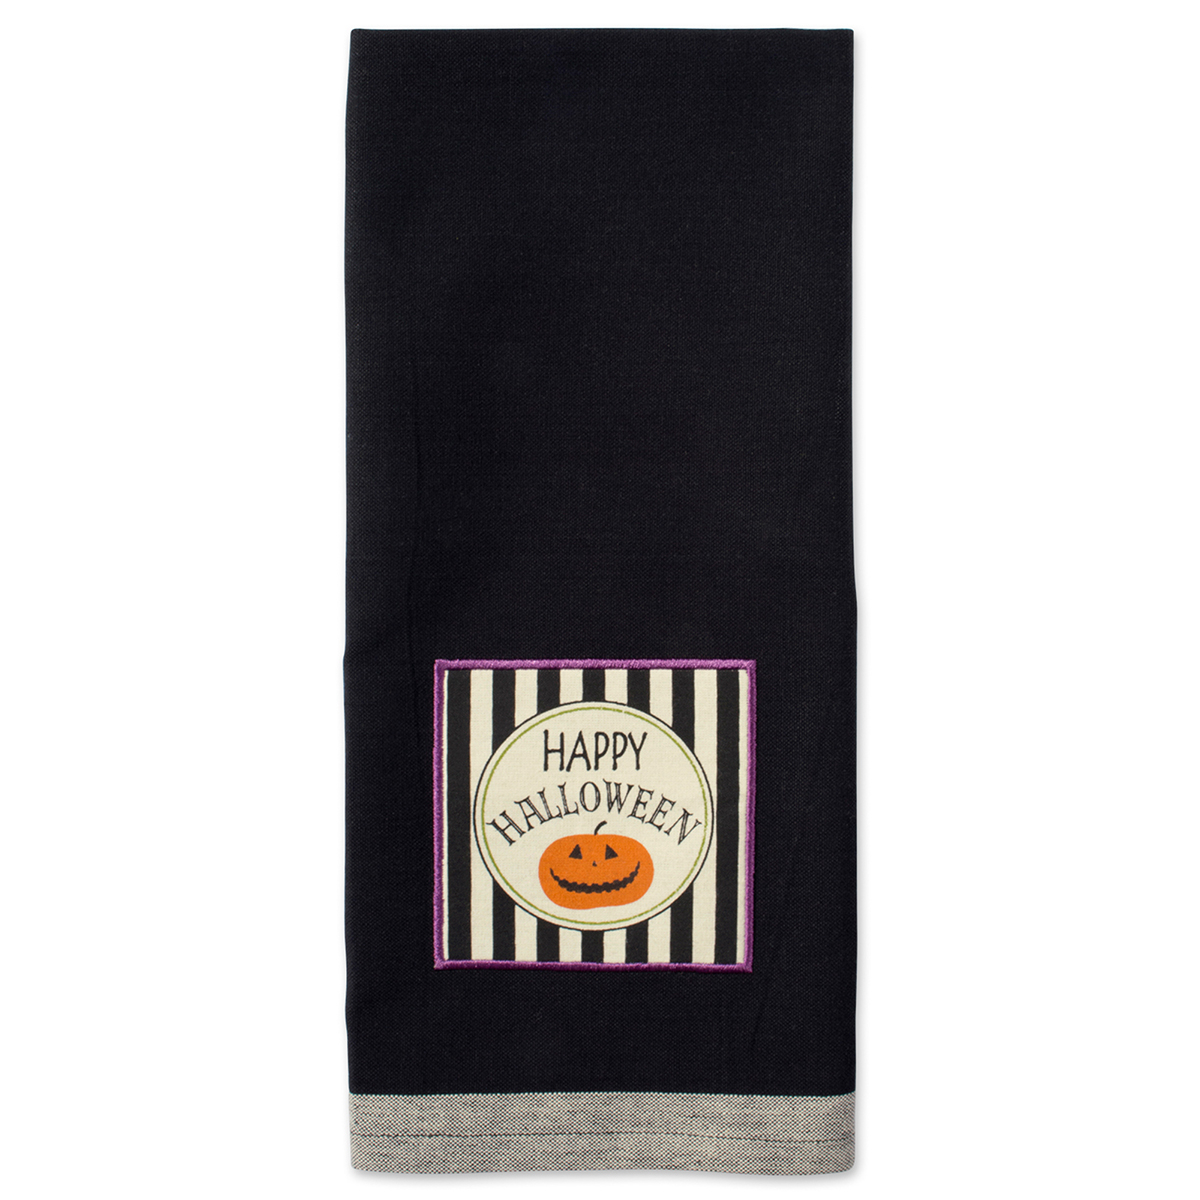 DII(R) Embellished All Hallows Eve Kitchen Towel Set Of 3